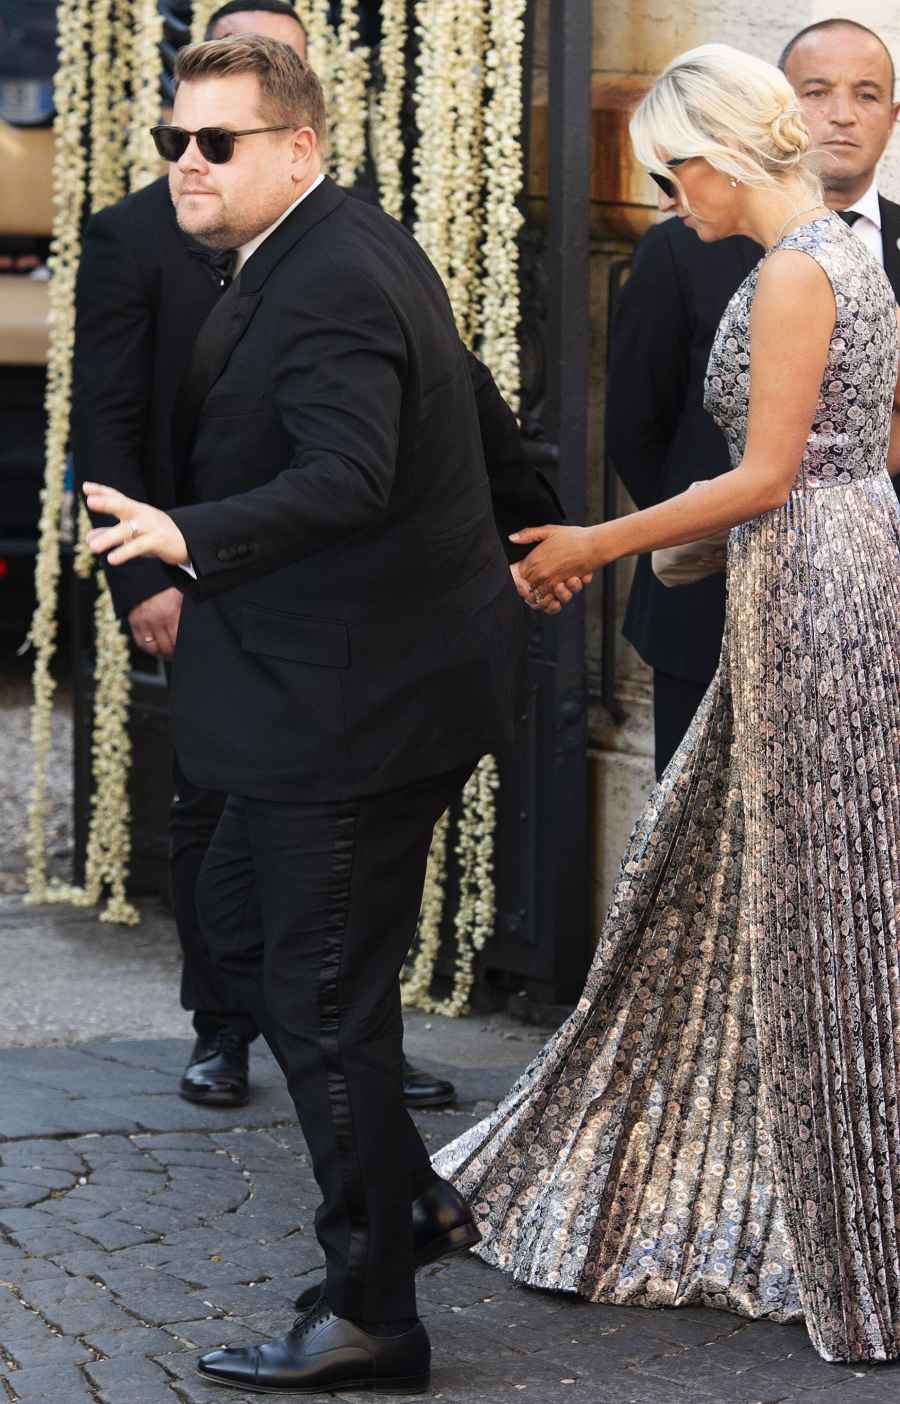 James Corden and wife Julia Carey at Misha Nonoo's Rome Wedding on September 20, 2019